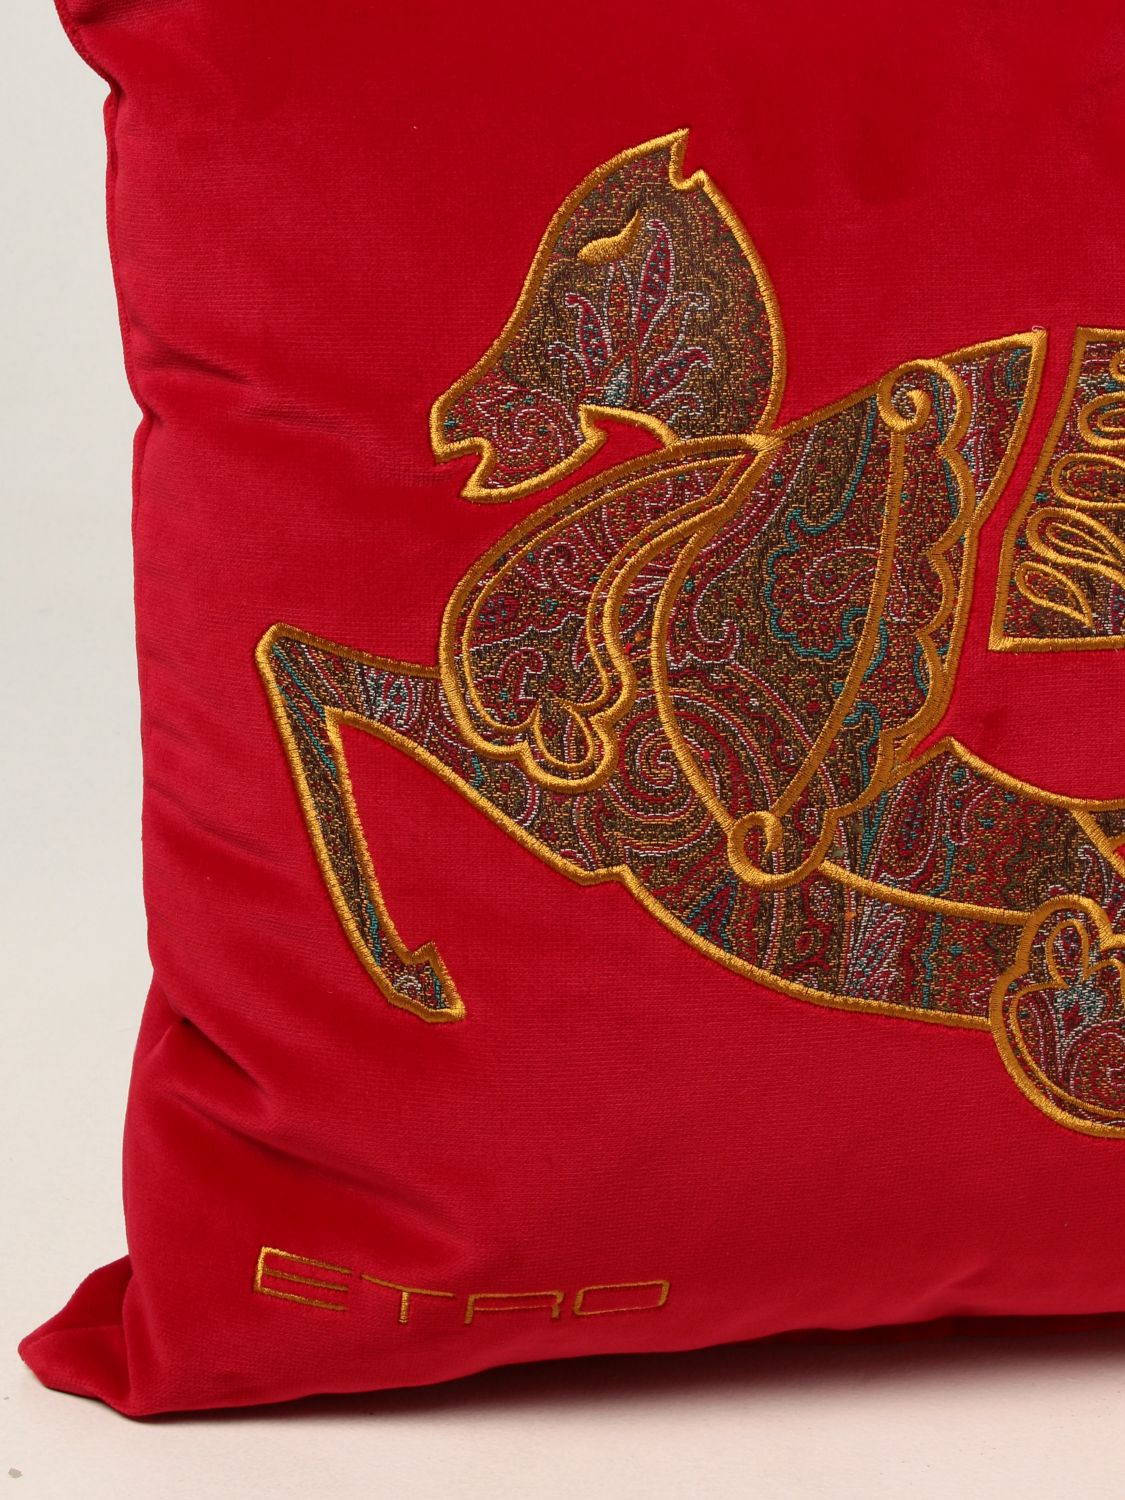 Pillow Etro Home: Pegaso Etro Home cushion in velvet red 2